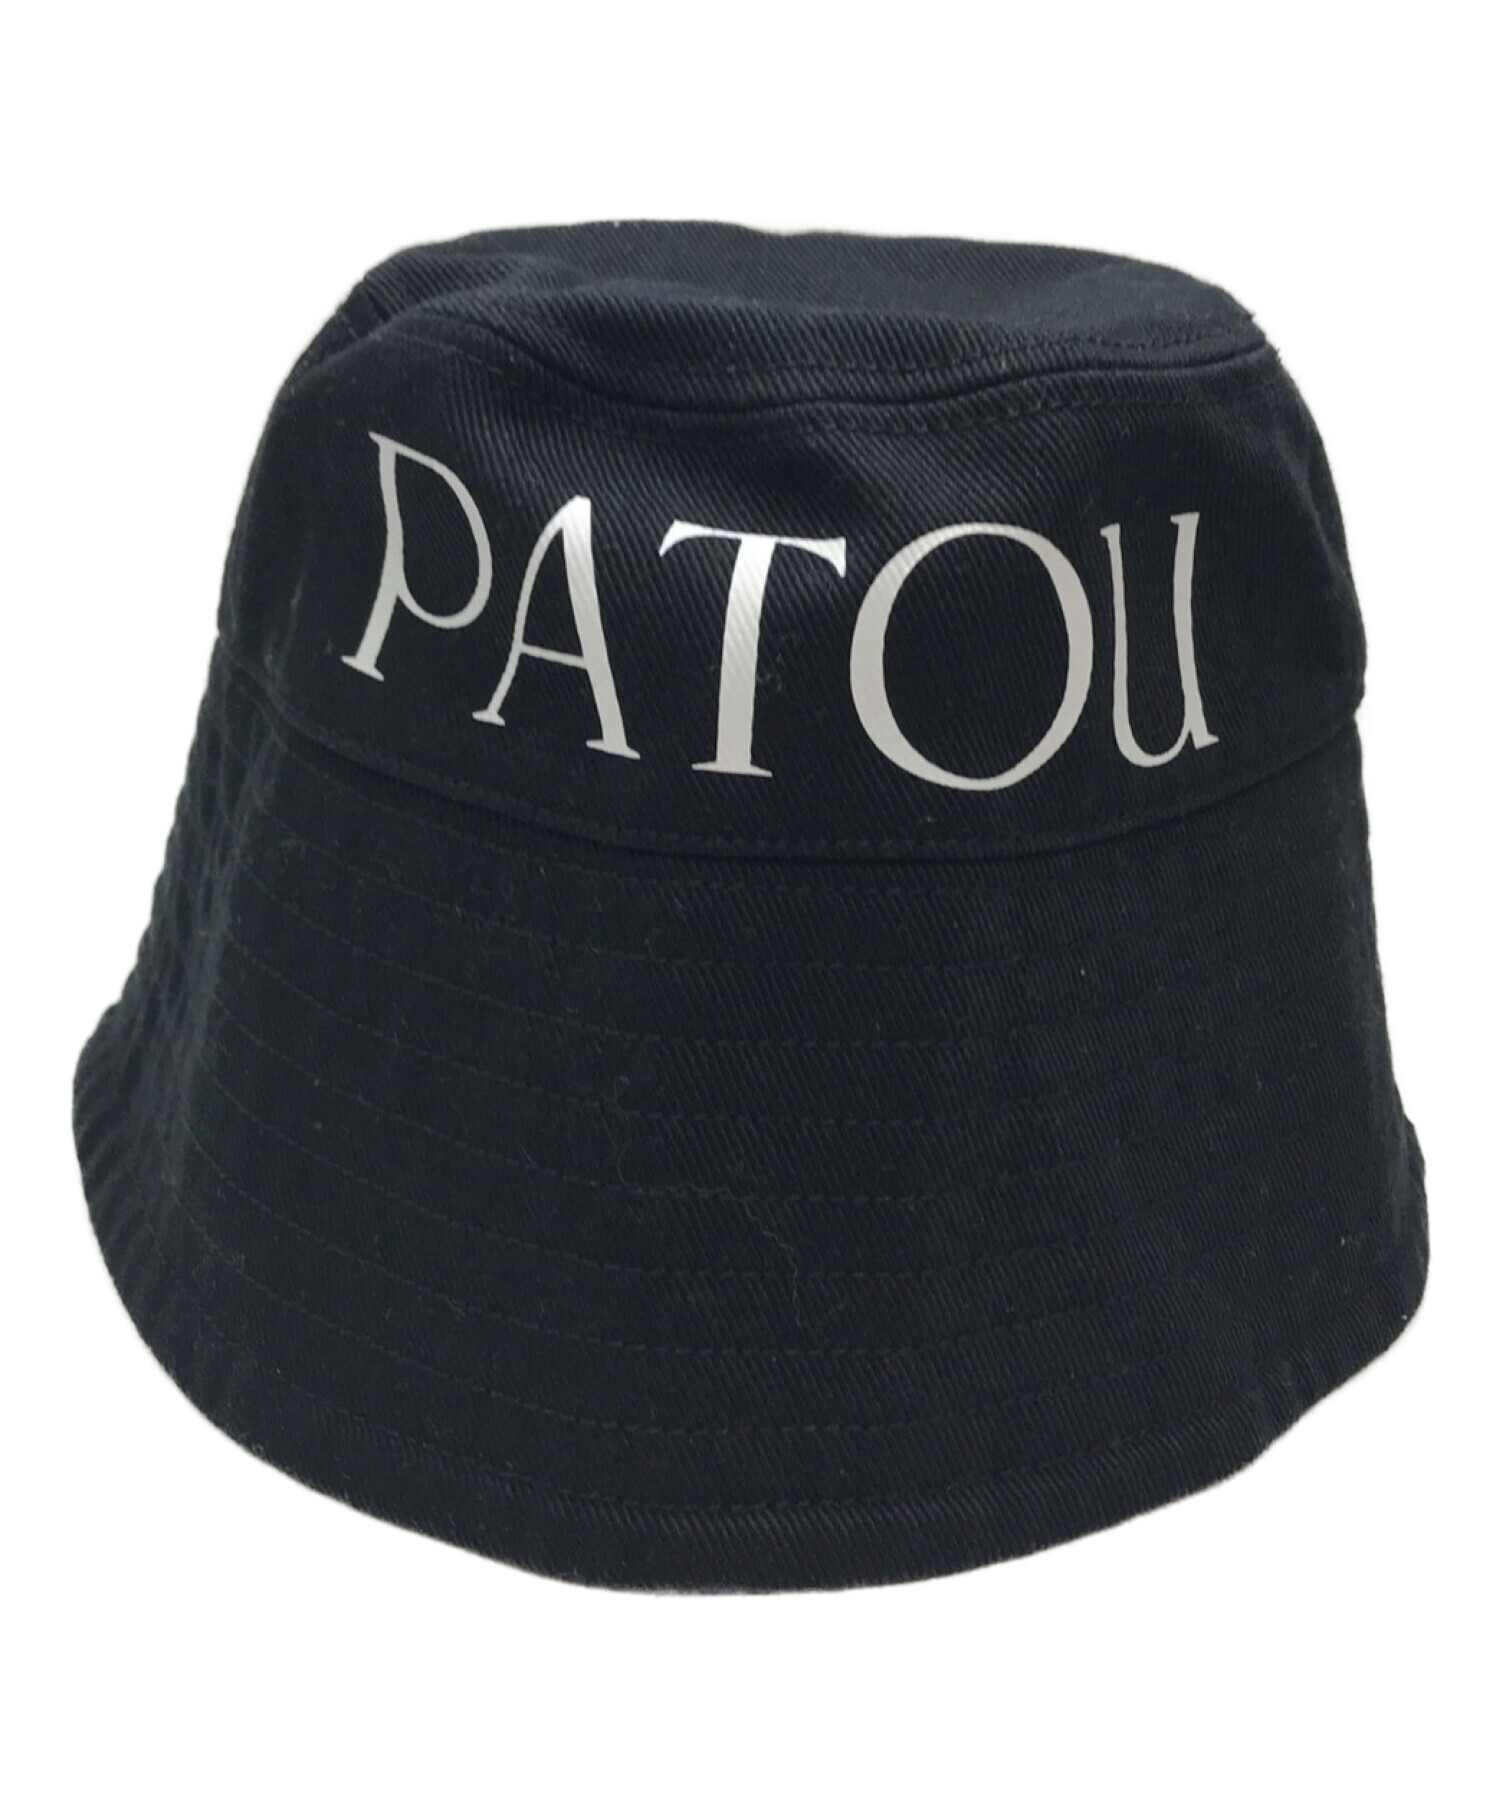 PATOU】パトゥ バケットハット-